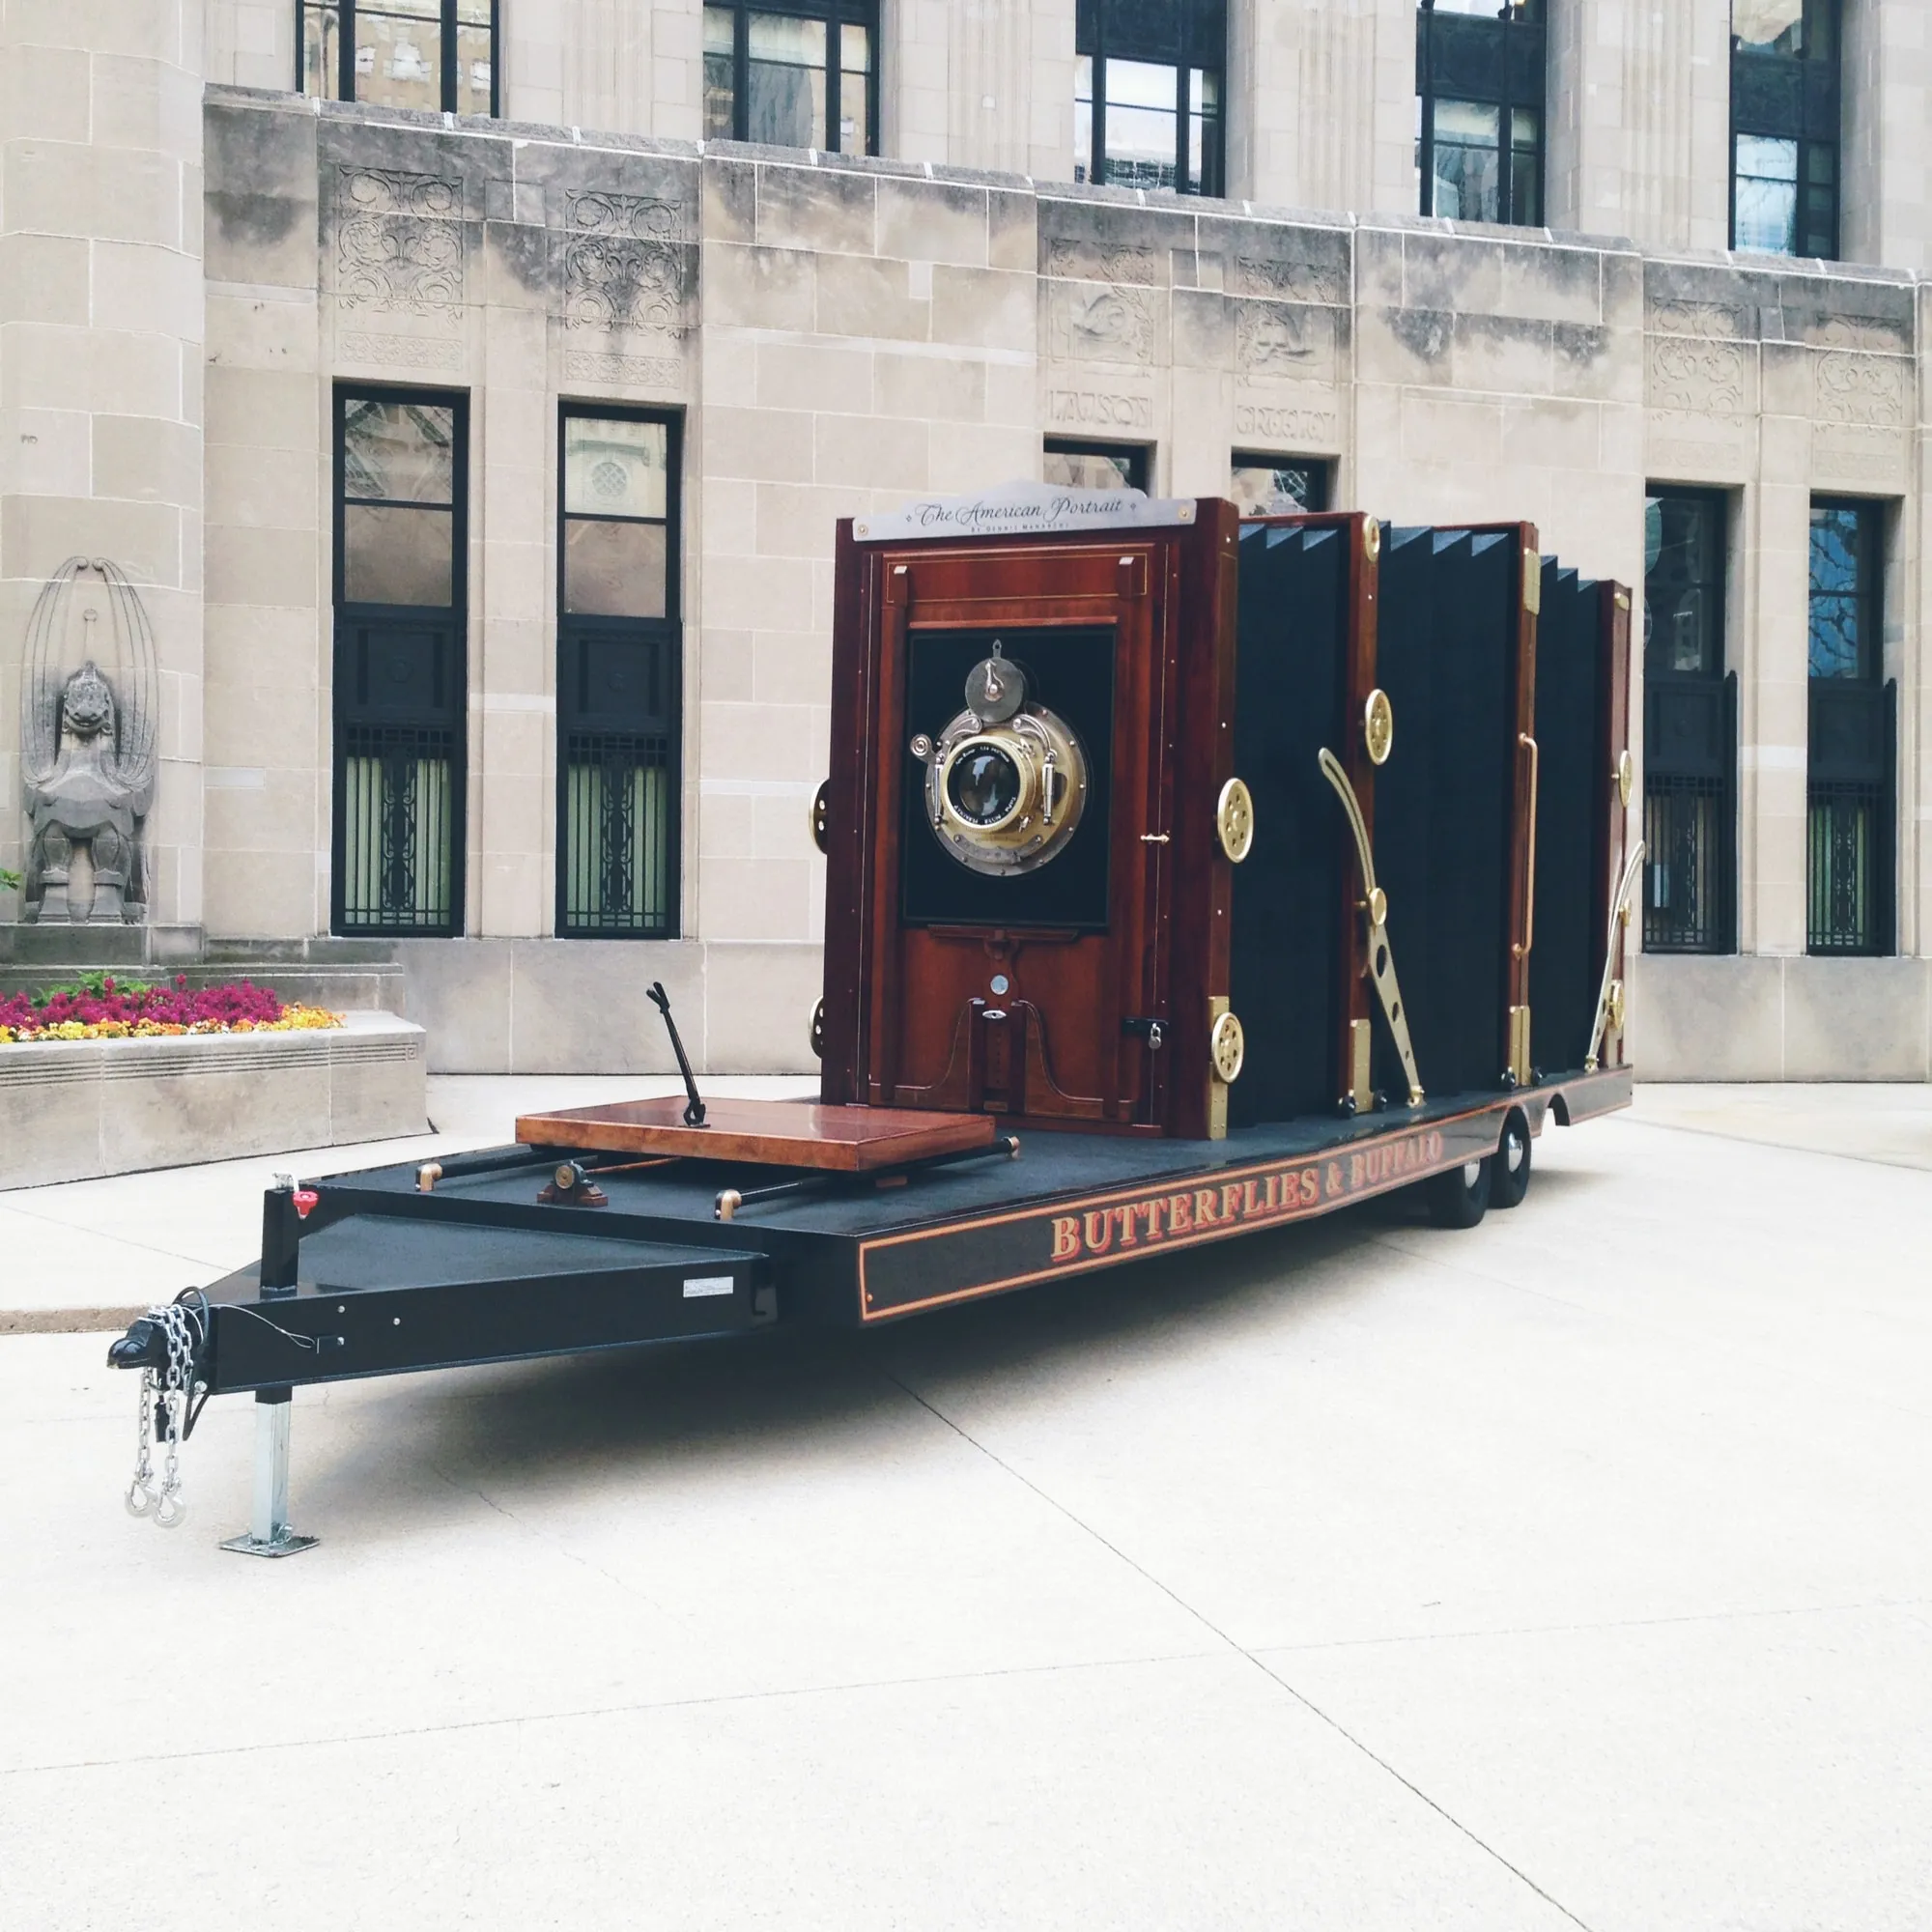 Dennis Manarchy's World's Largest Film Camera in Chicago